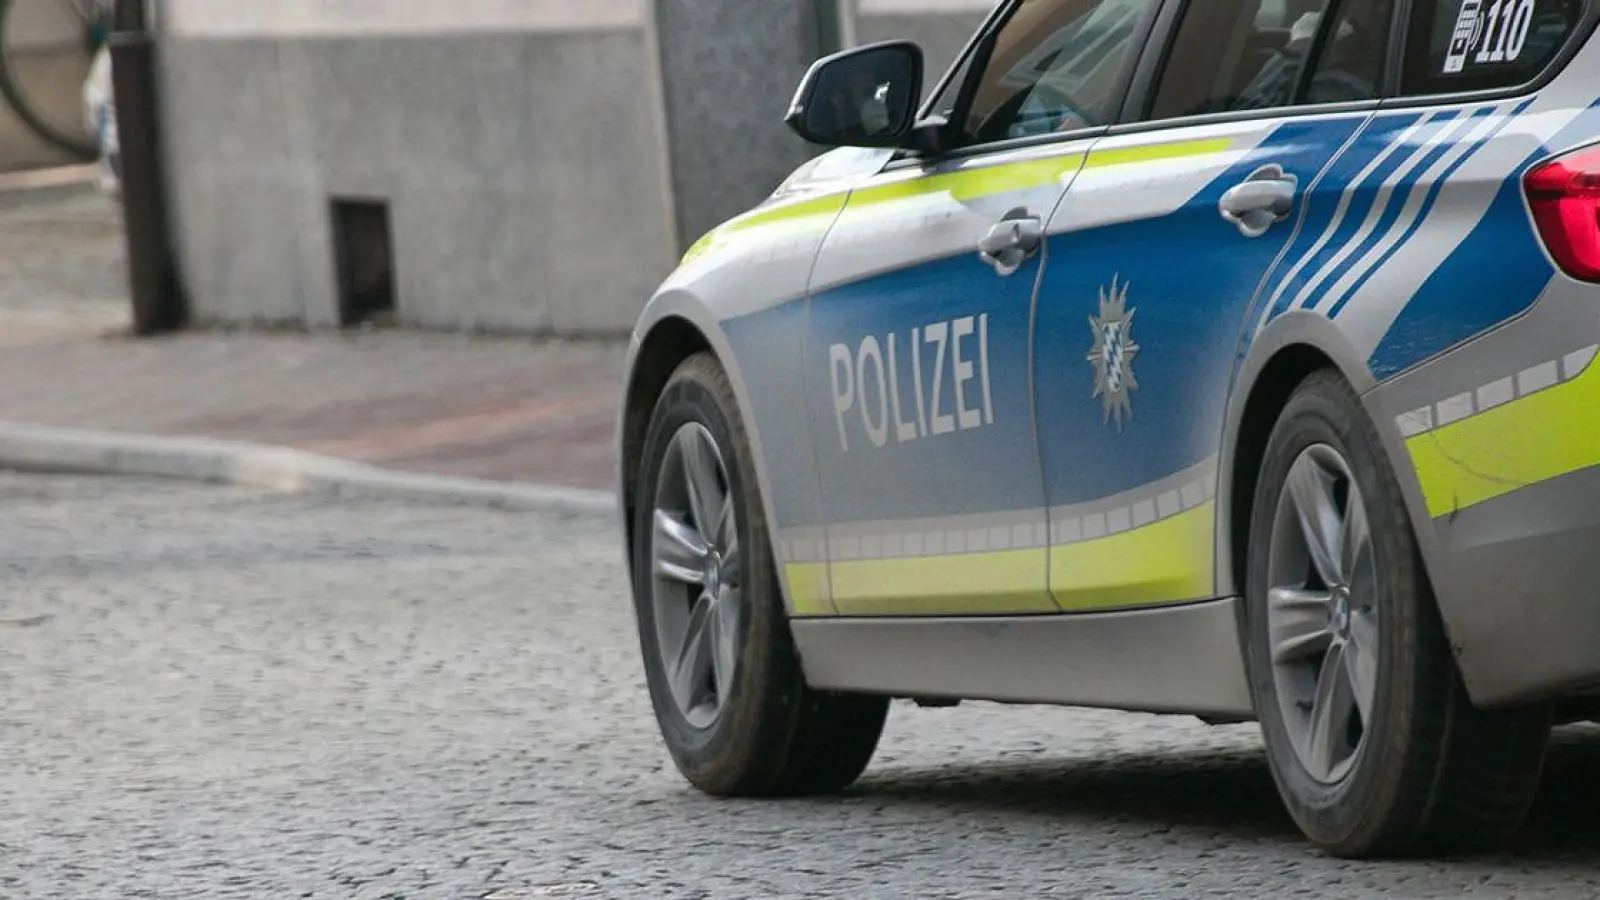 Polizei Bayreuth Symbolbild pixabay: planet_fox (Foto: Symbolbild: pixabay/planet_fox)